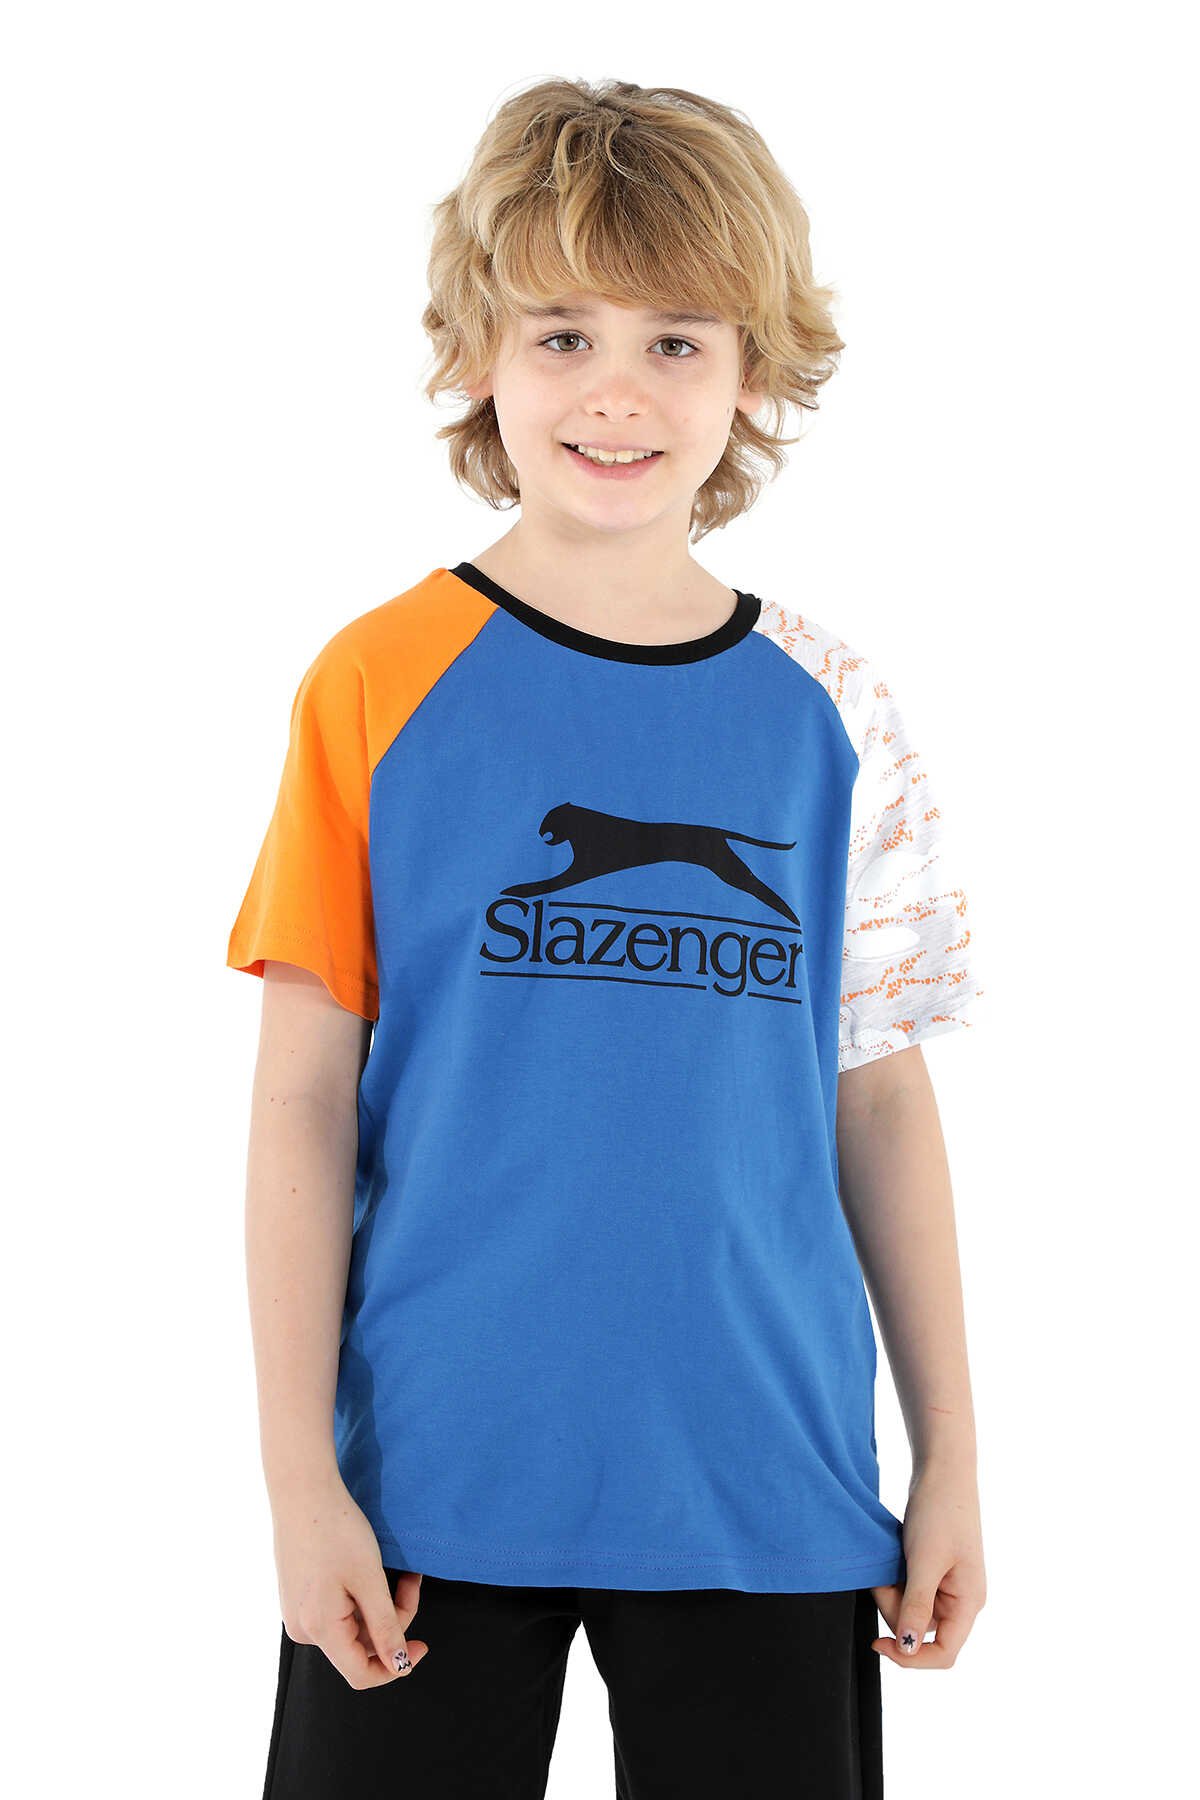 Slazenger - Slazenger PARVEEN Erkek Çocuk Kısa Kol T-Shirt Saks Mavi